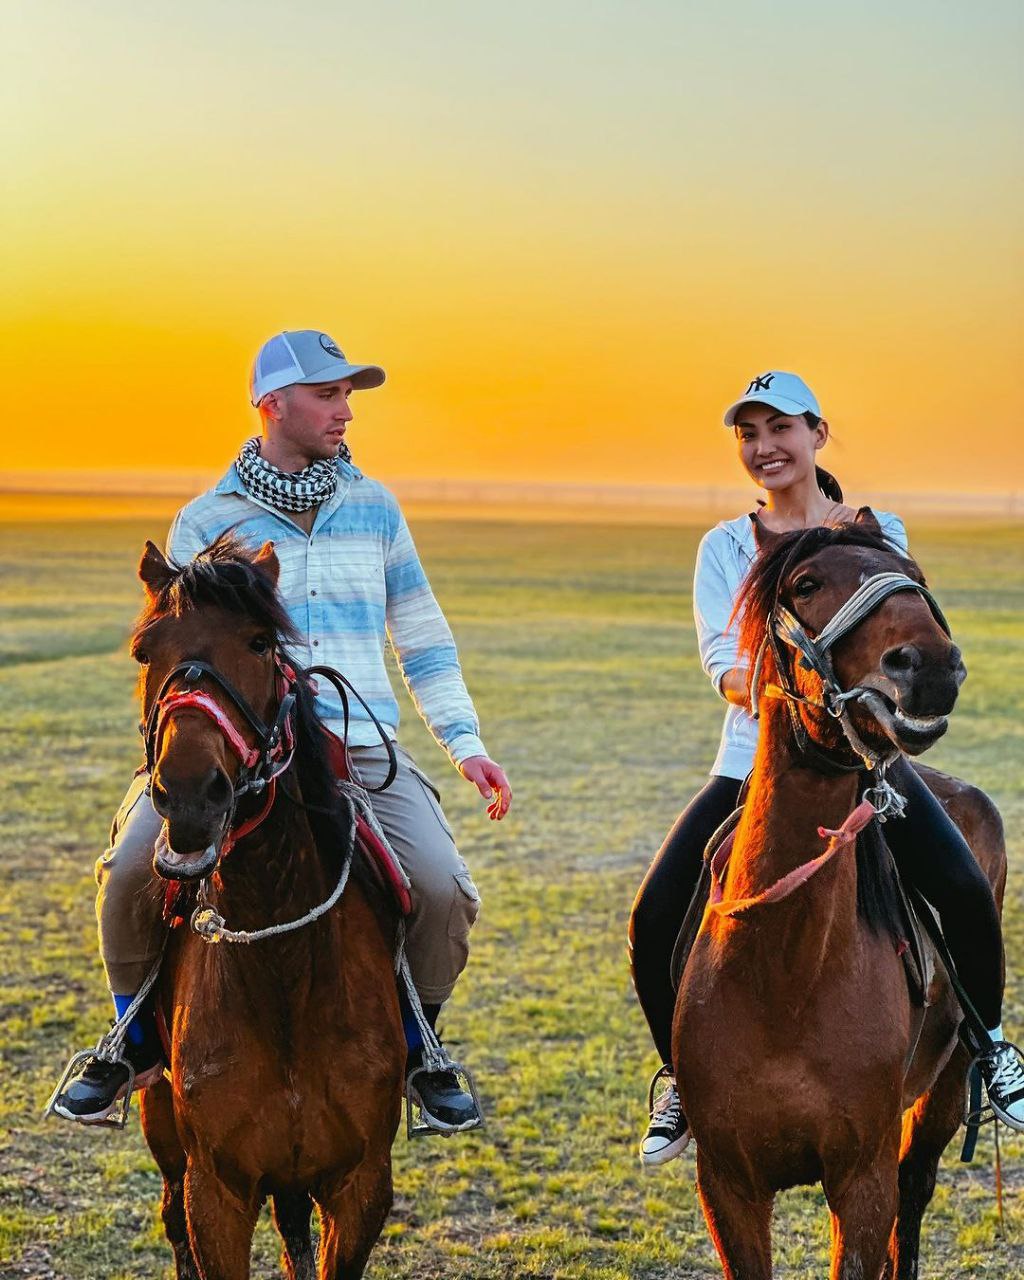 horseback riding in Kazakhstan